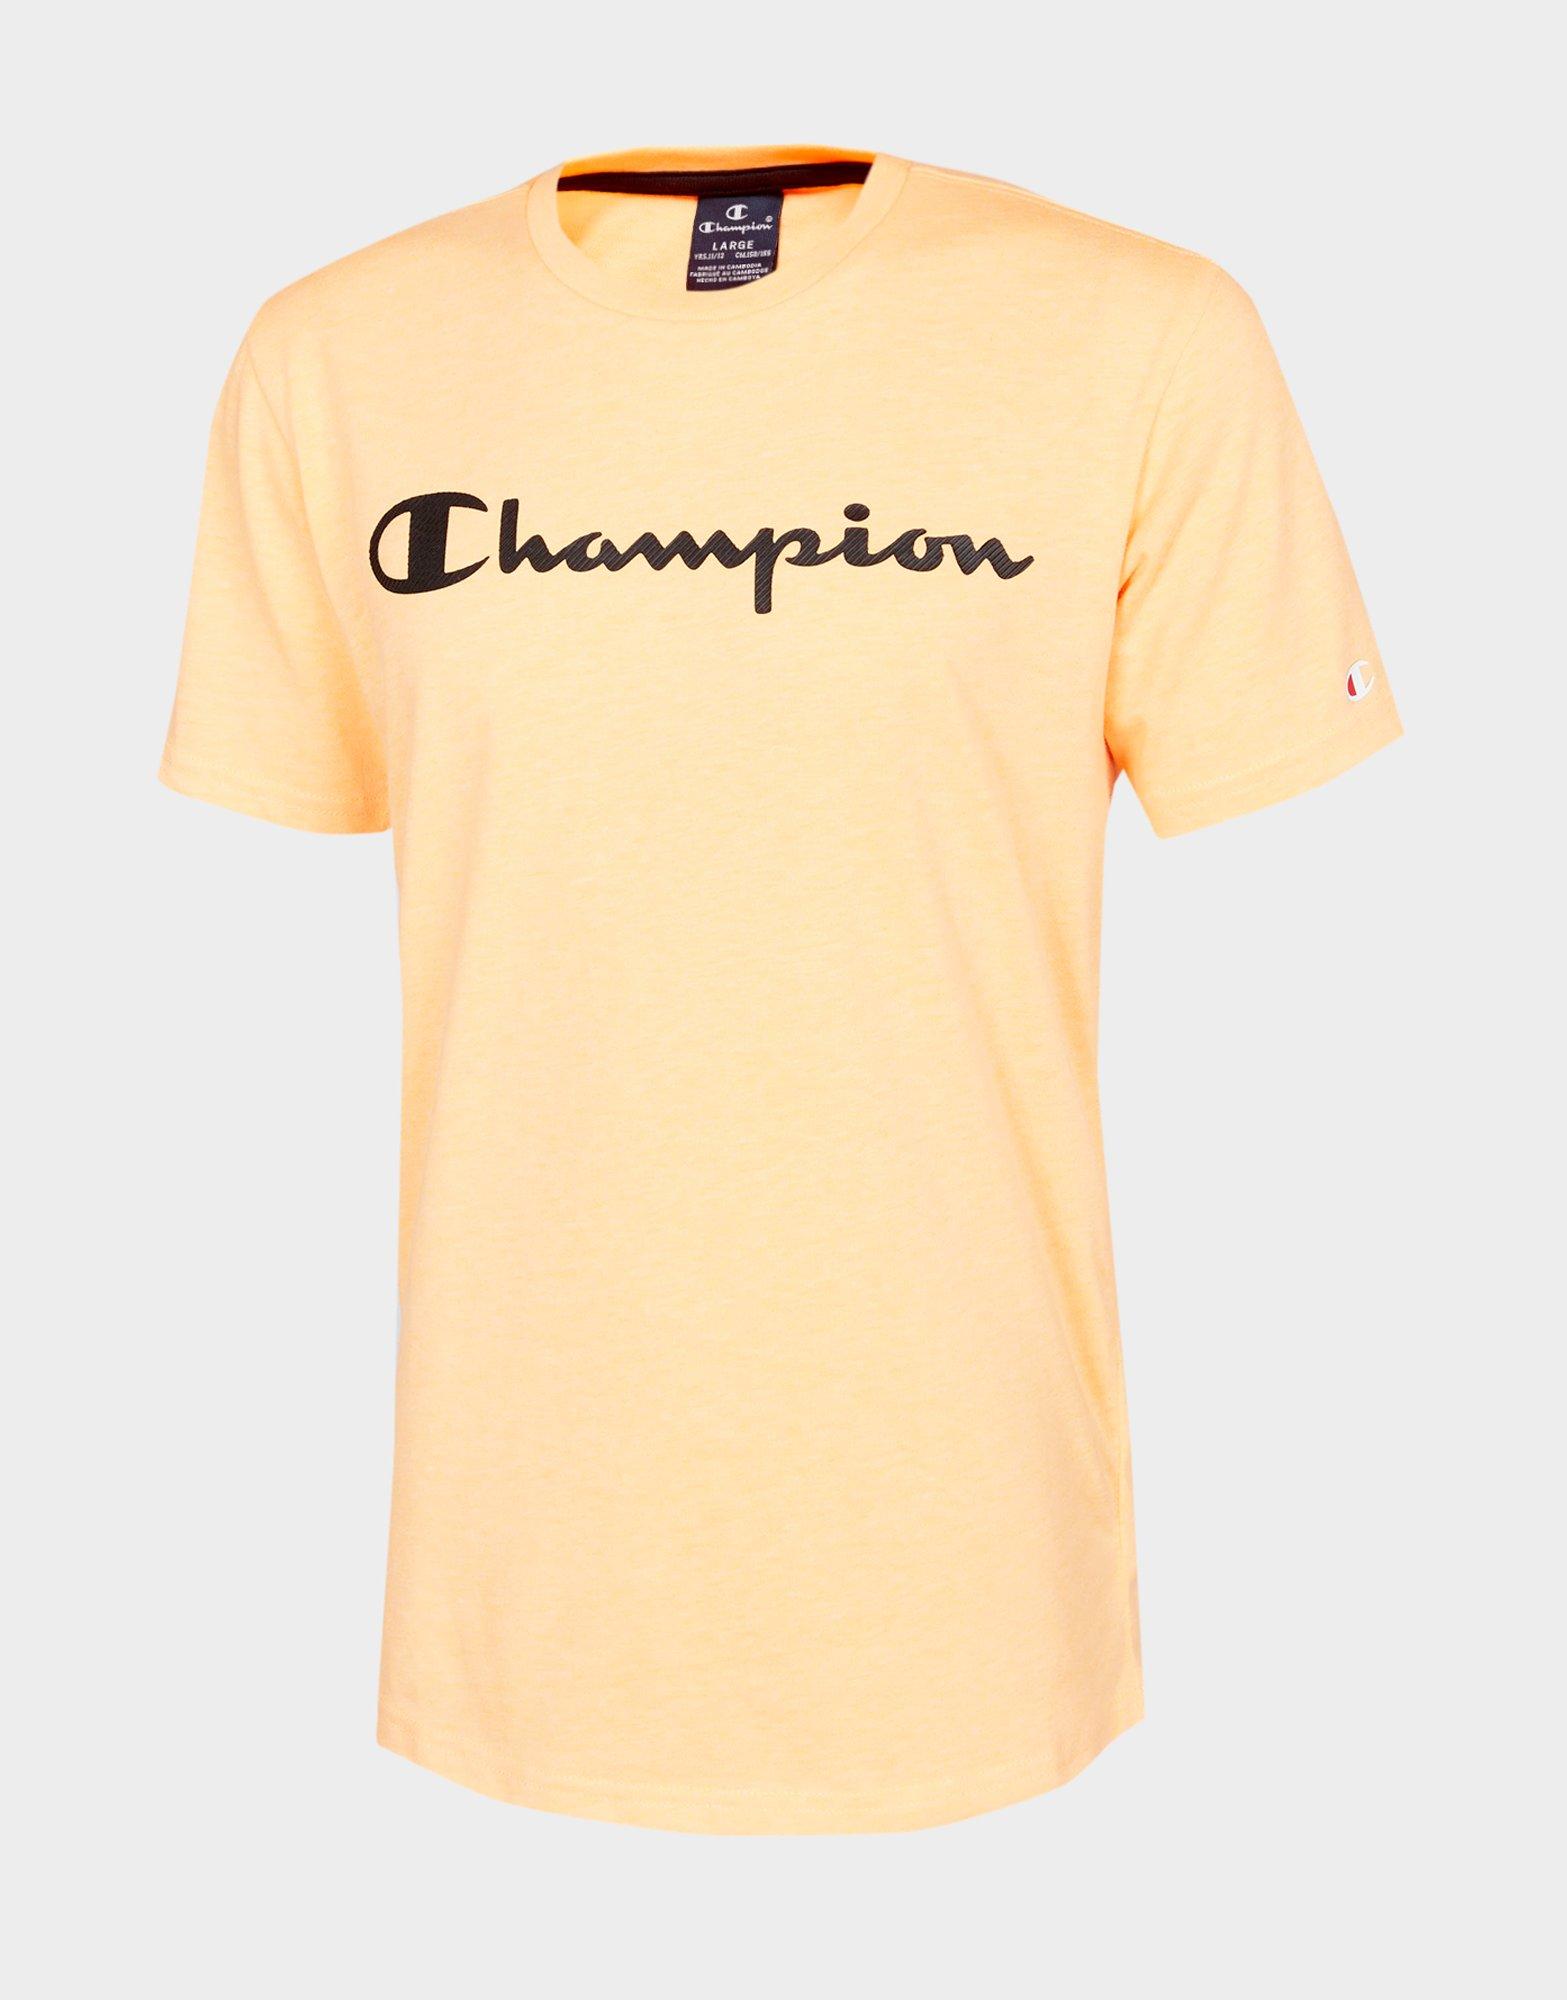 neon champion shirt